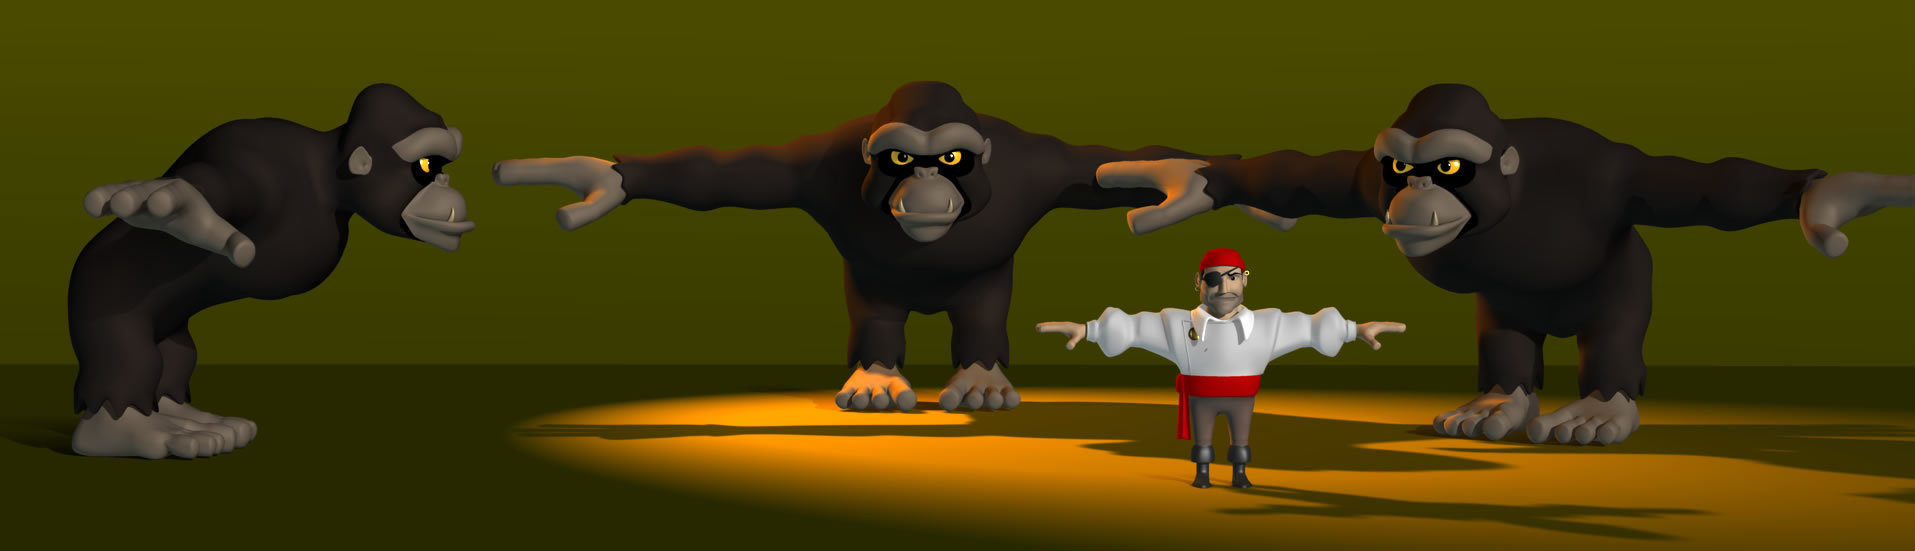 gorilla0.jpg